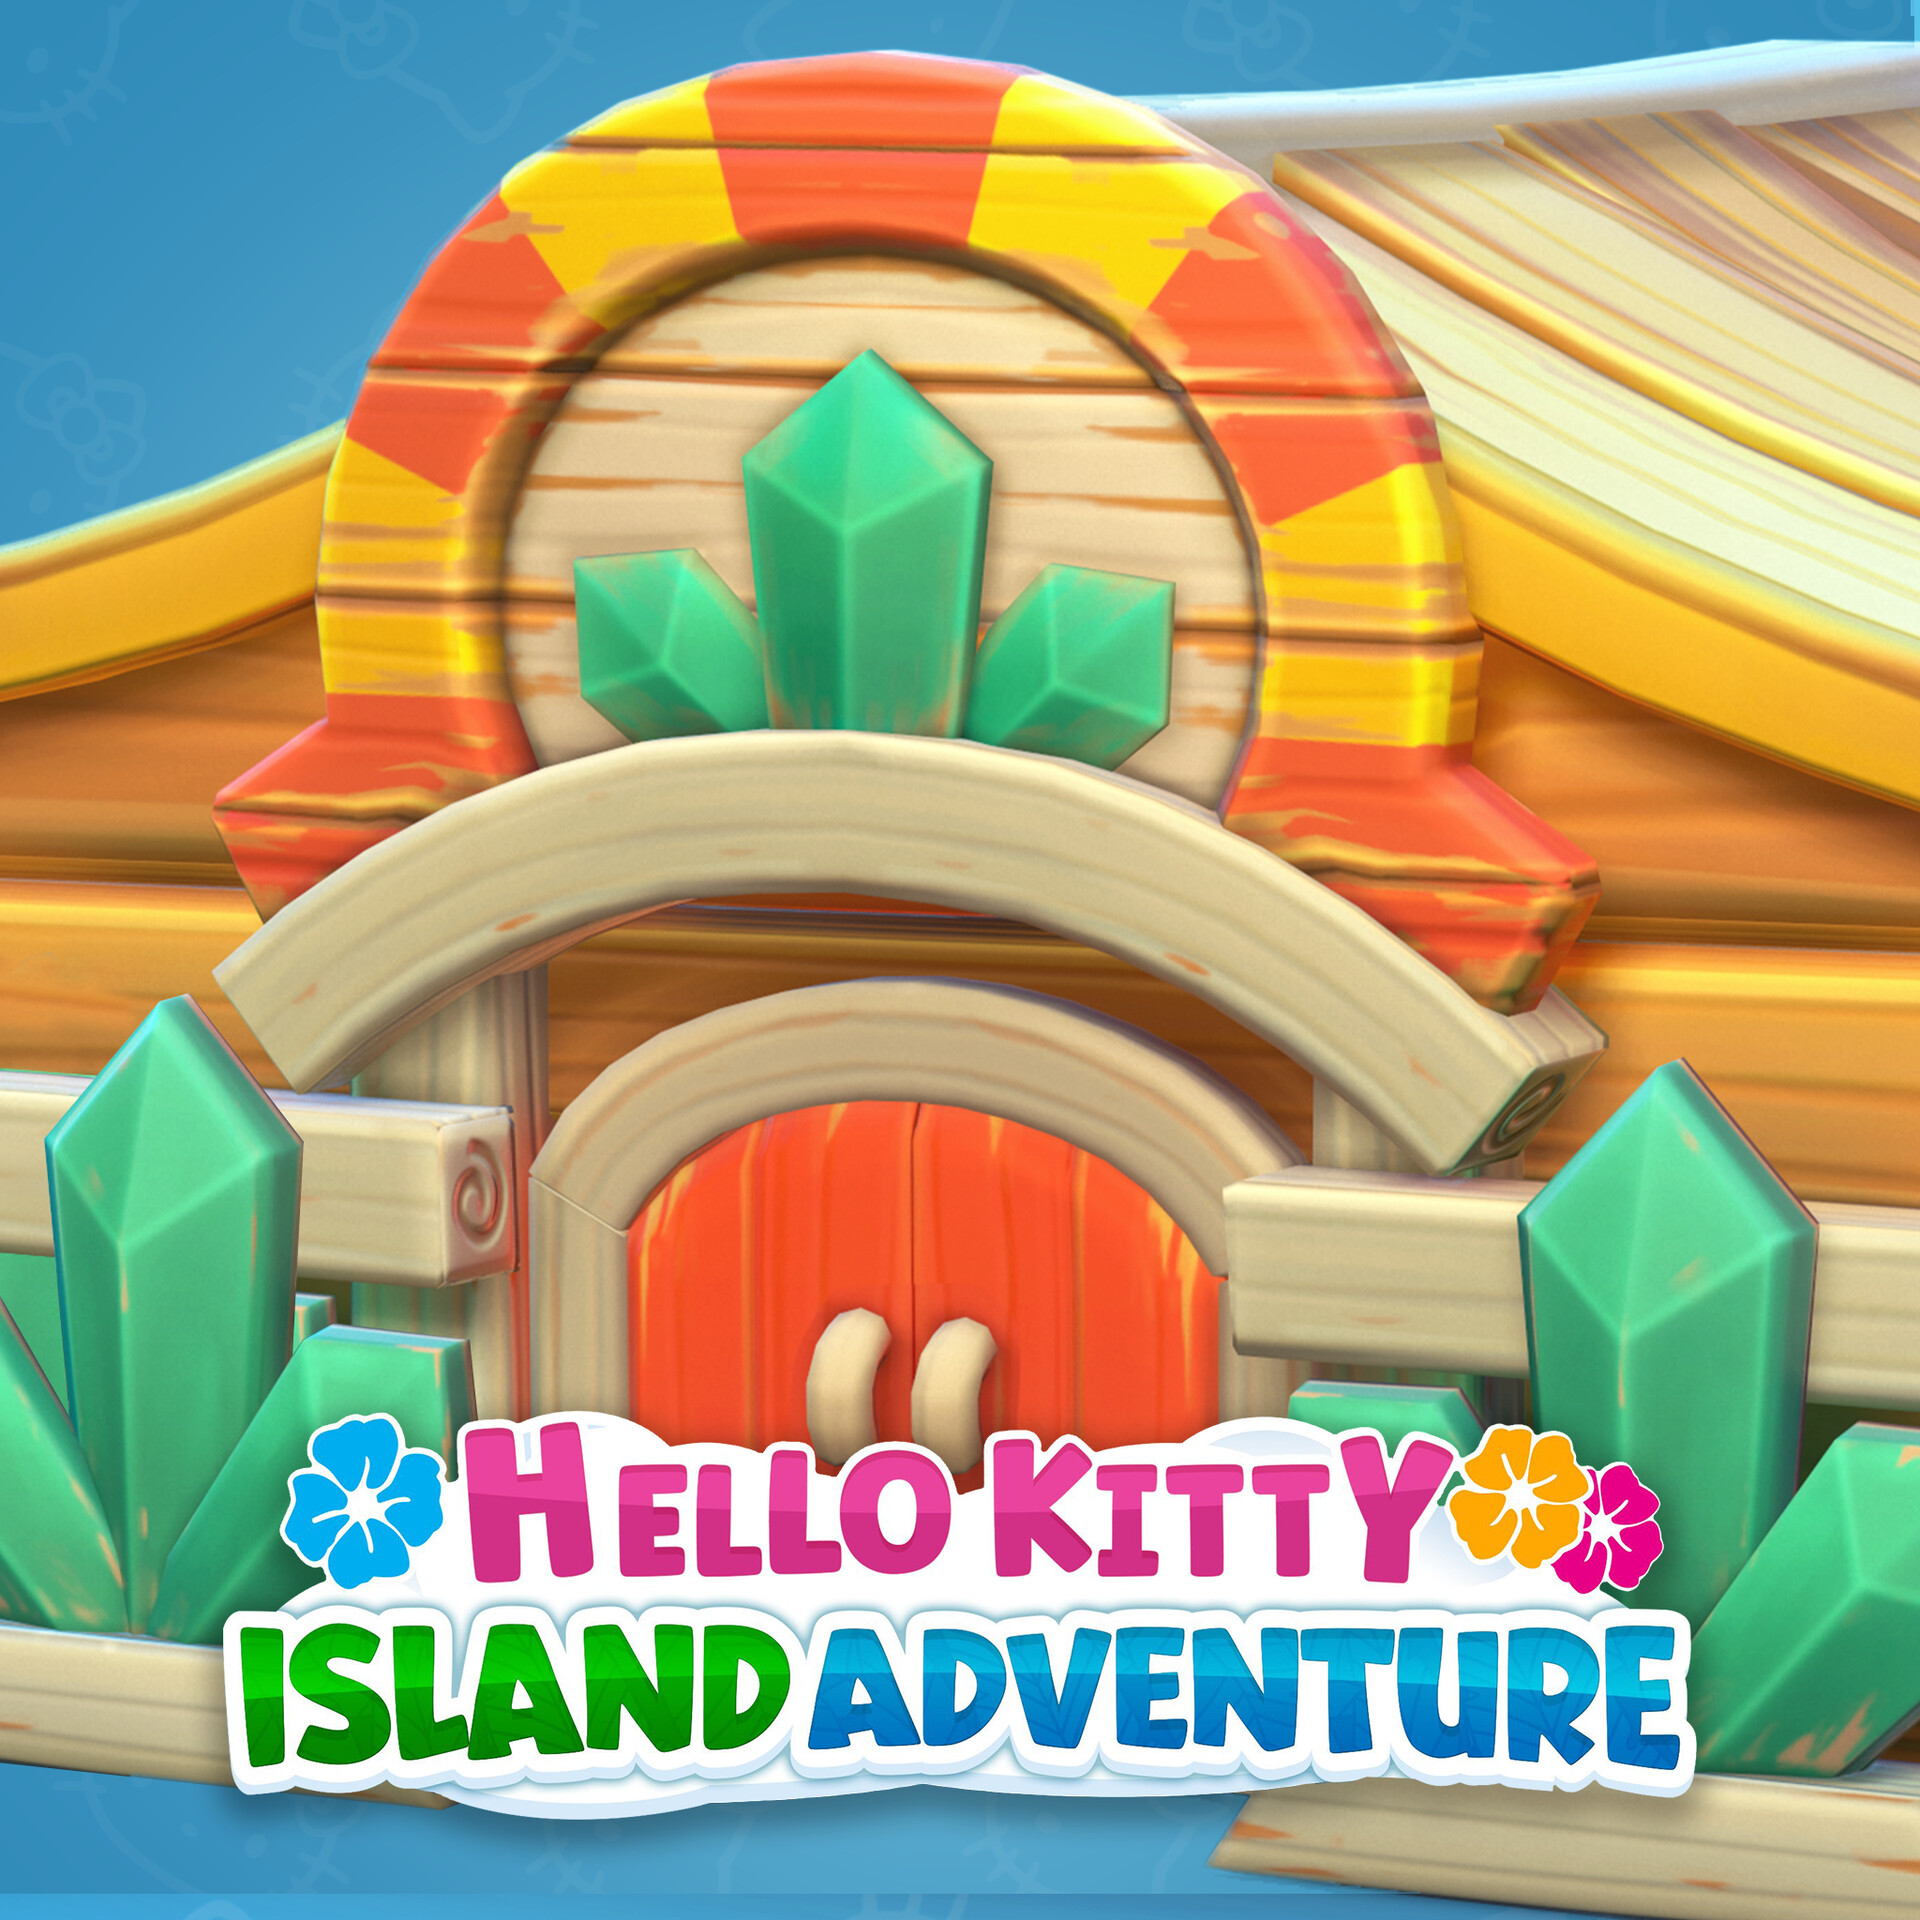 ArtStation - Hello Kitty Island Adventure - Gem Match Game / Dance